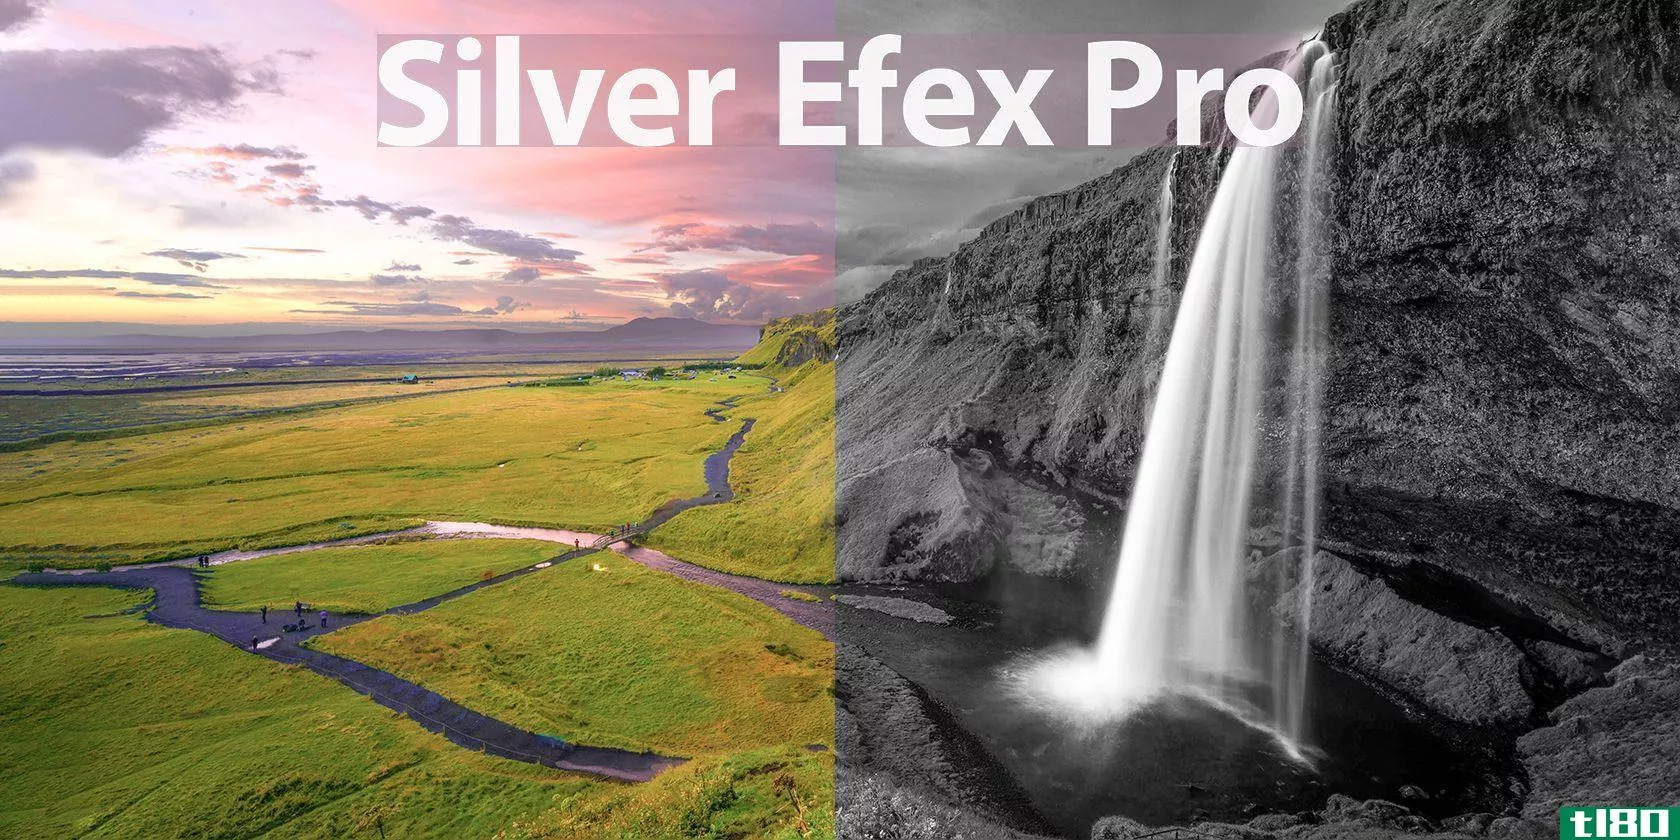 Silver Efex Pro Landscape Example